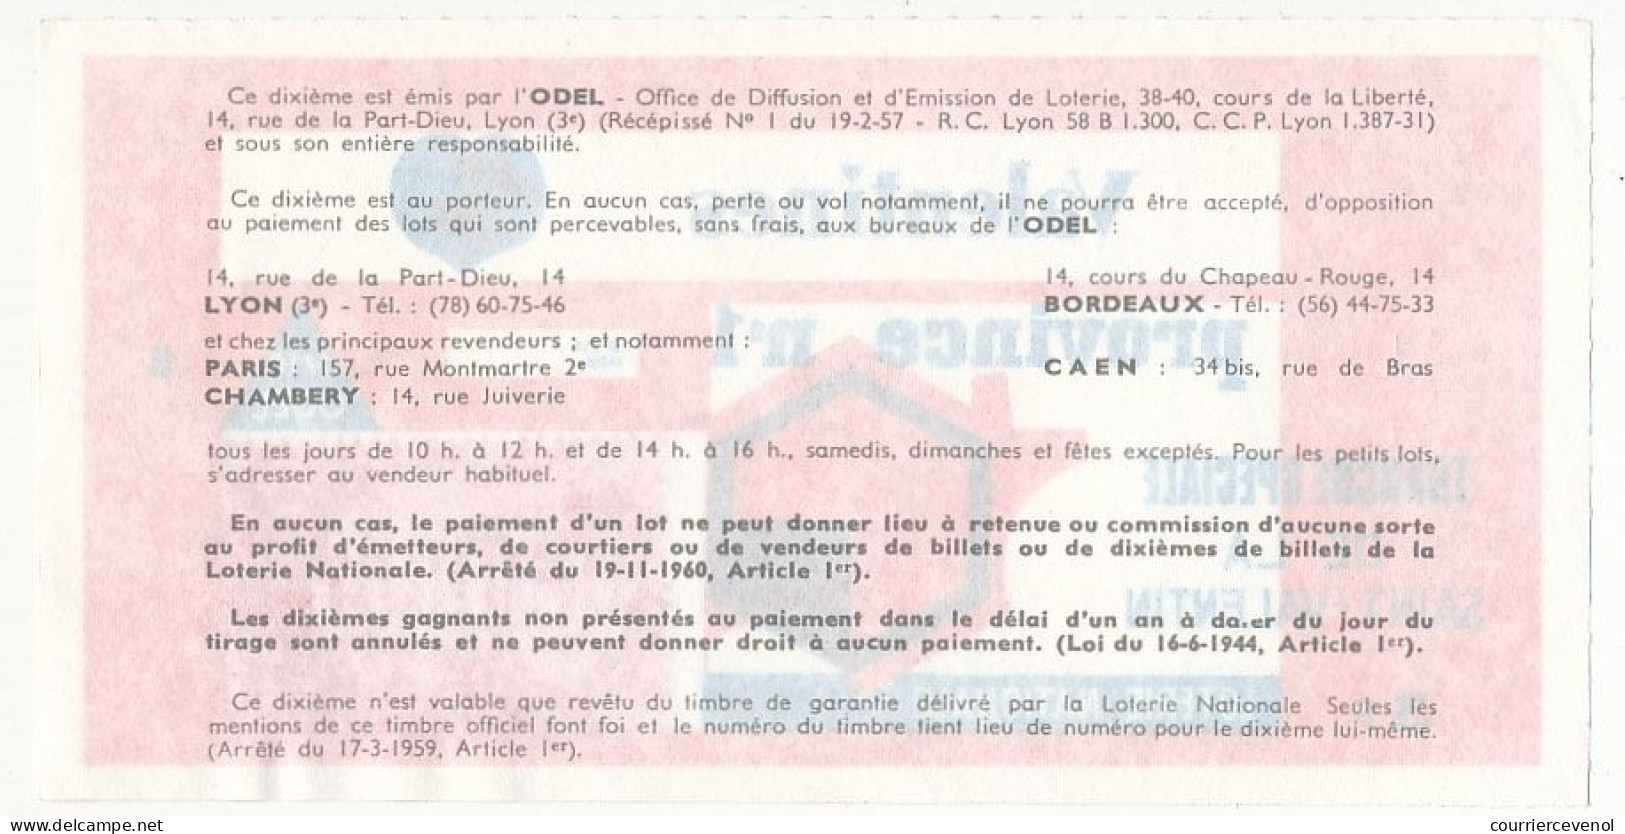 FRANCE - Loterie Nationale - Tranche Spéciale Saint Valentin - Valentines - ODEL - 1/10ème 1971 - Série B - Loterijbiljetten